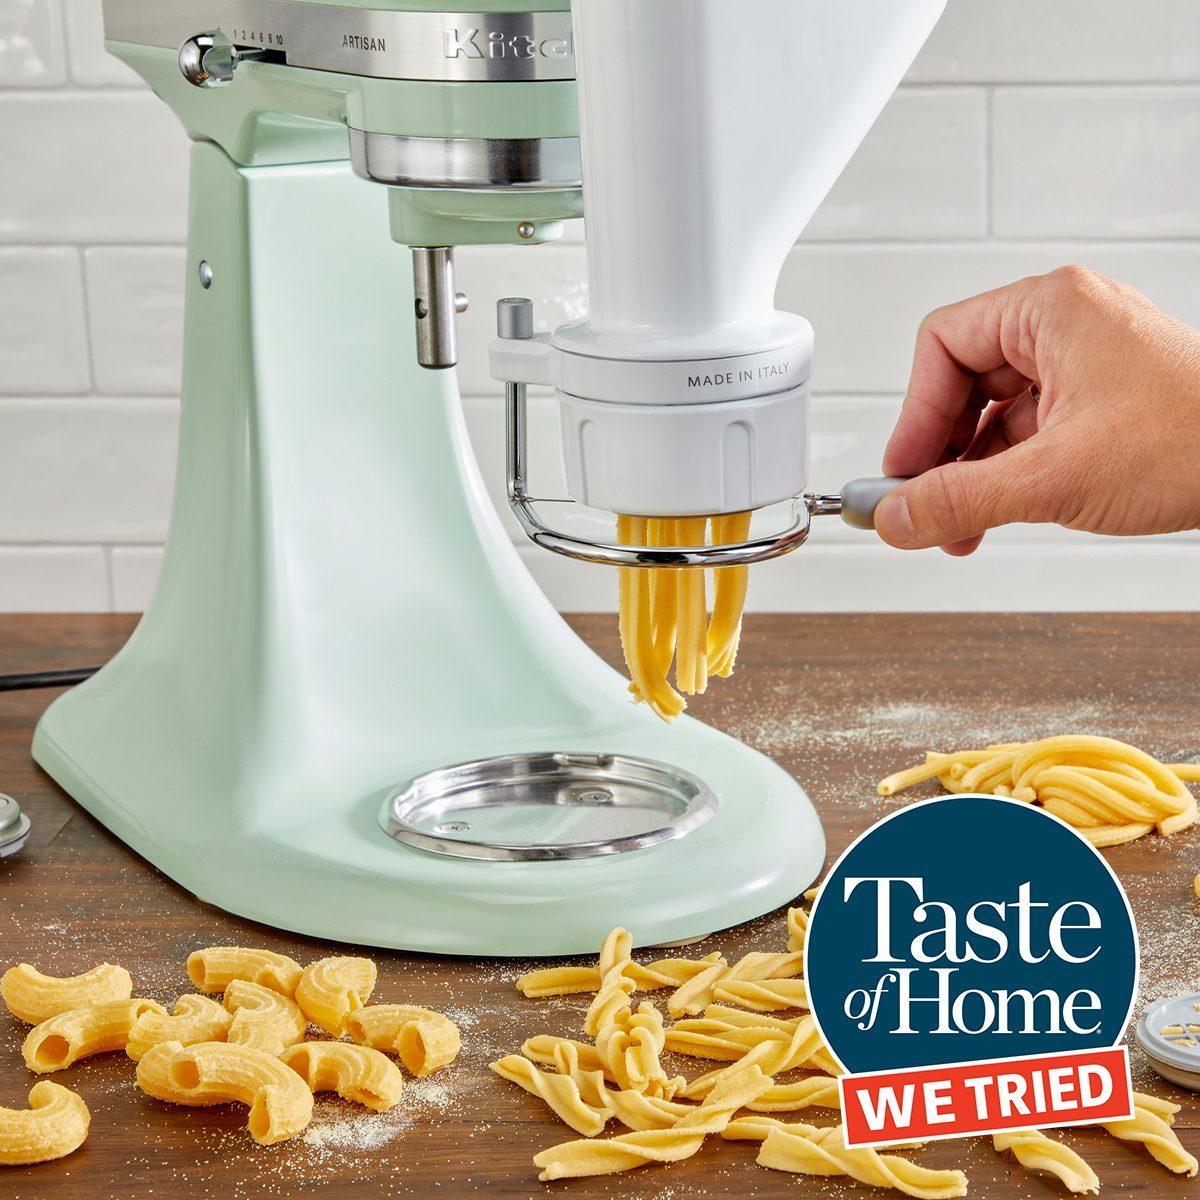 2024 Pasta Maker Attachment for Kitchenaid Stand Mixer,3 in 1